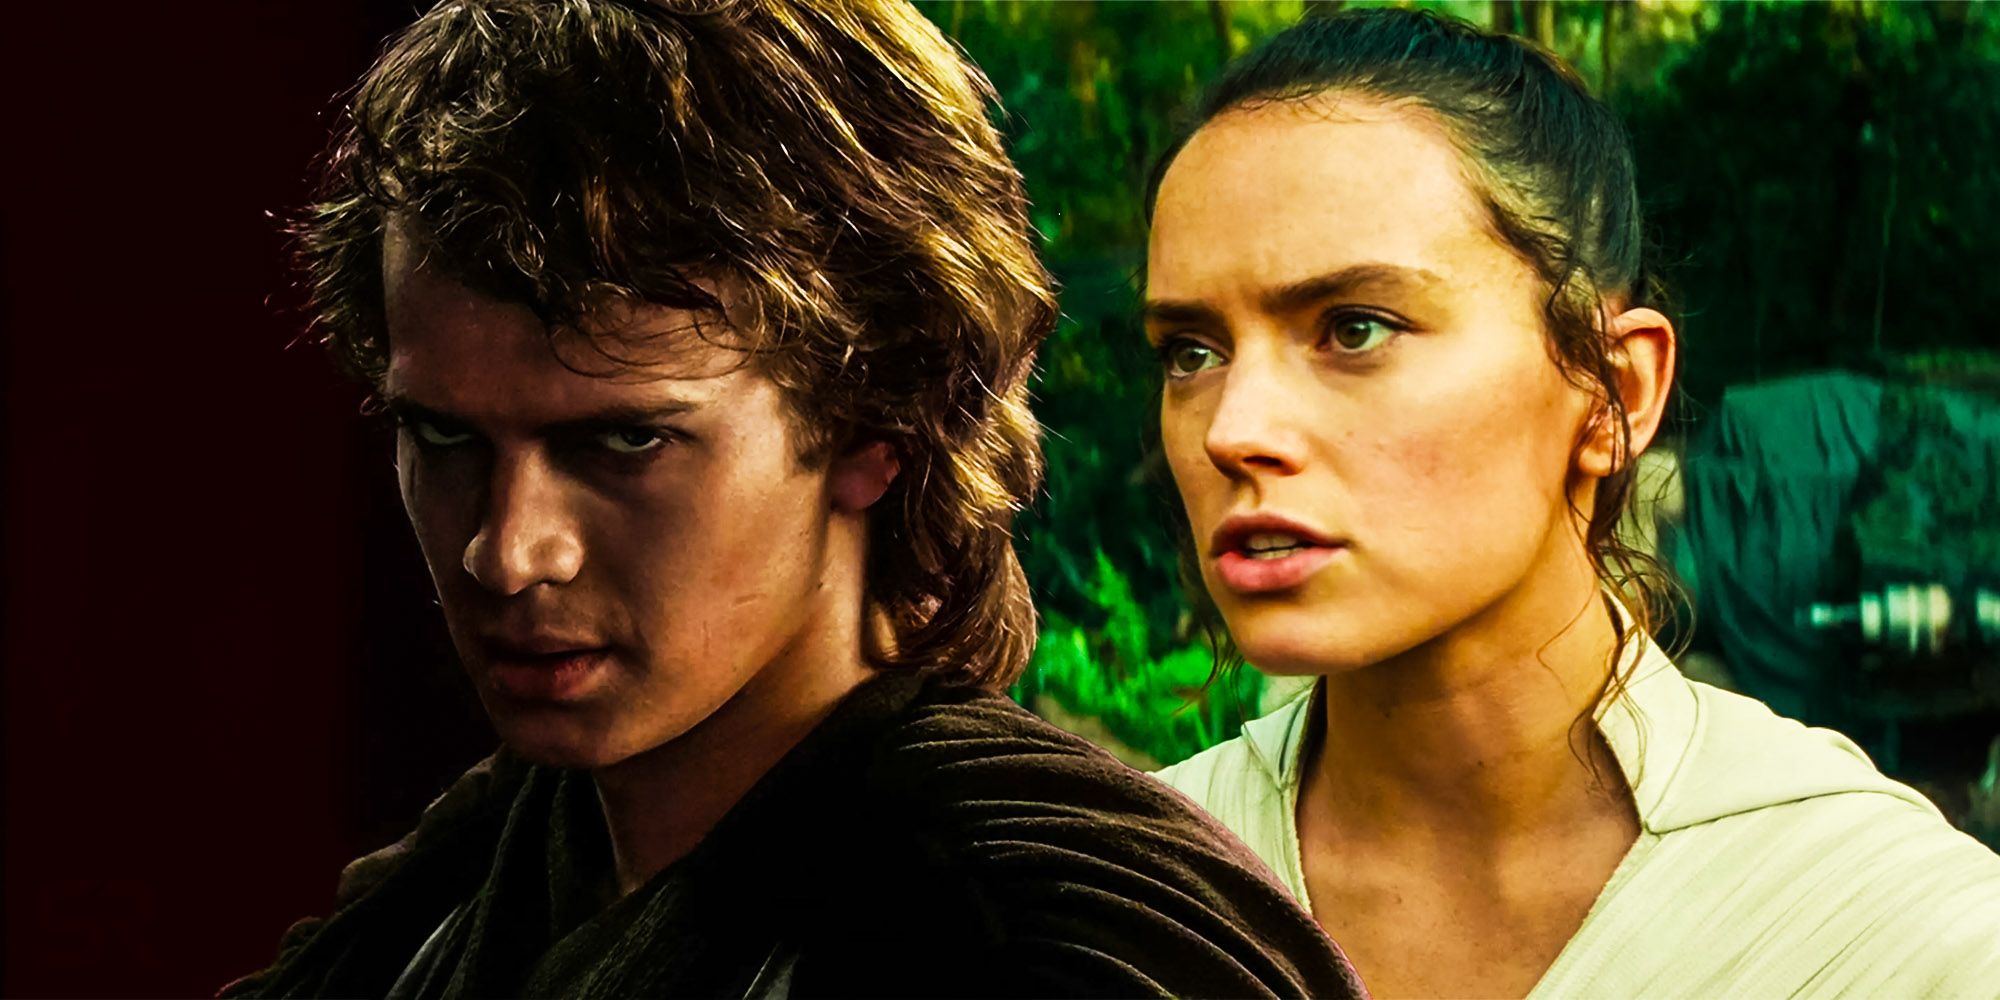 Star Wars theory Rey is Anakin skywalker reincarnated